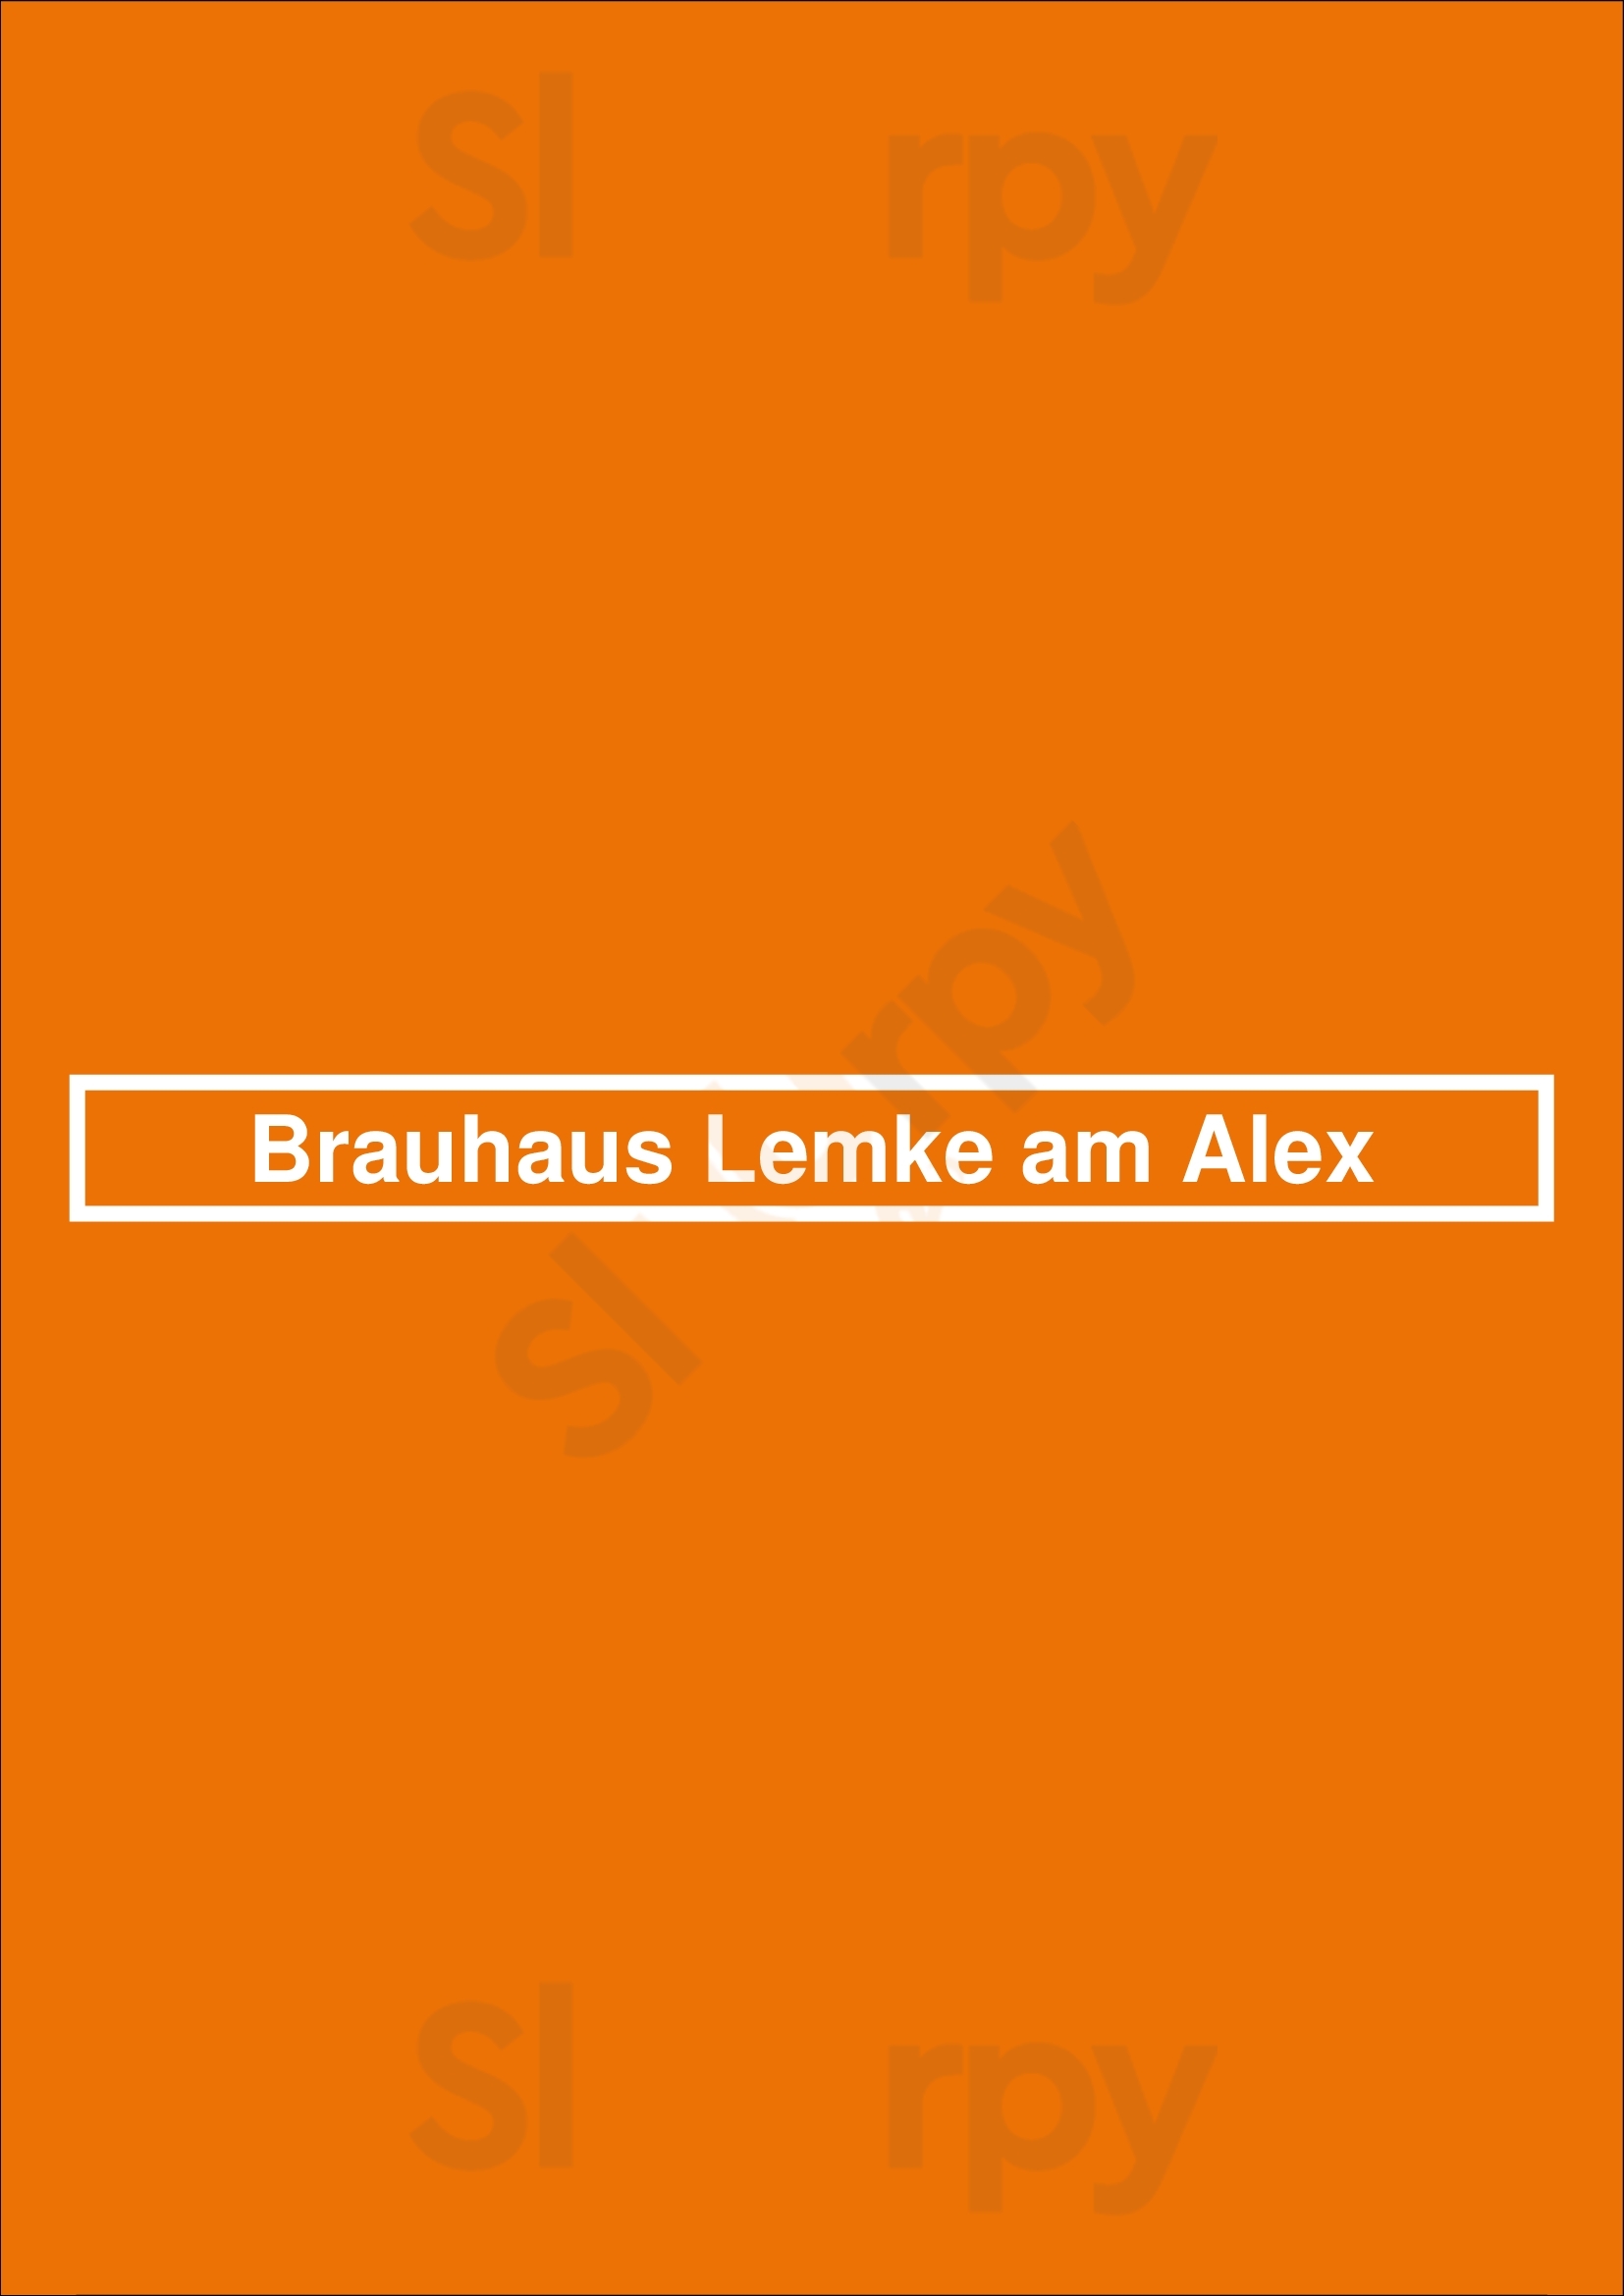 Brauhaus Lemke Am Alex Berlin Menu - 1